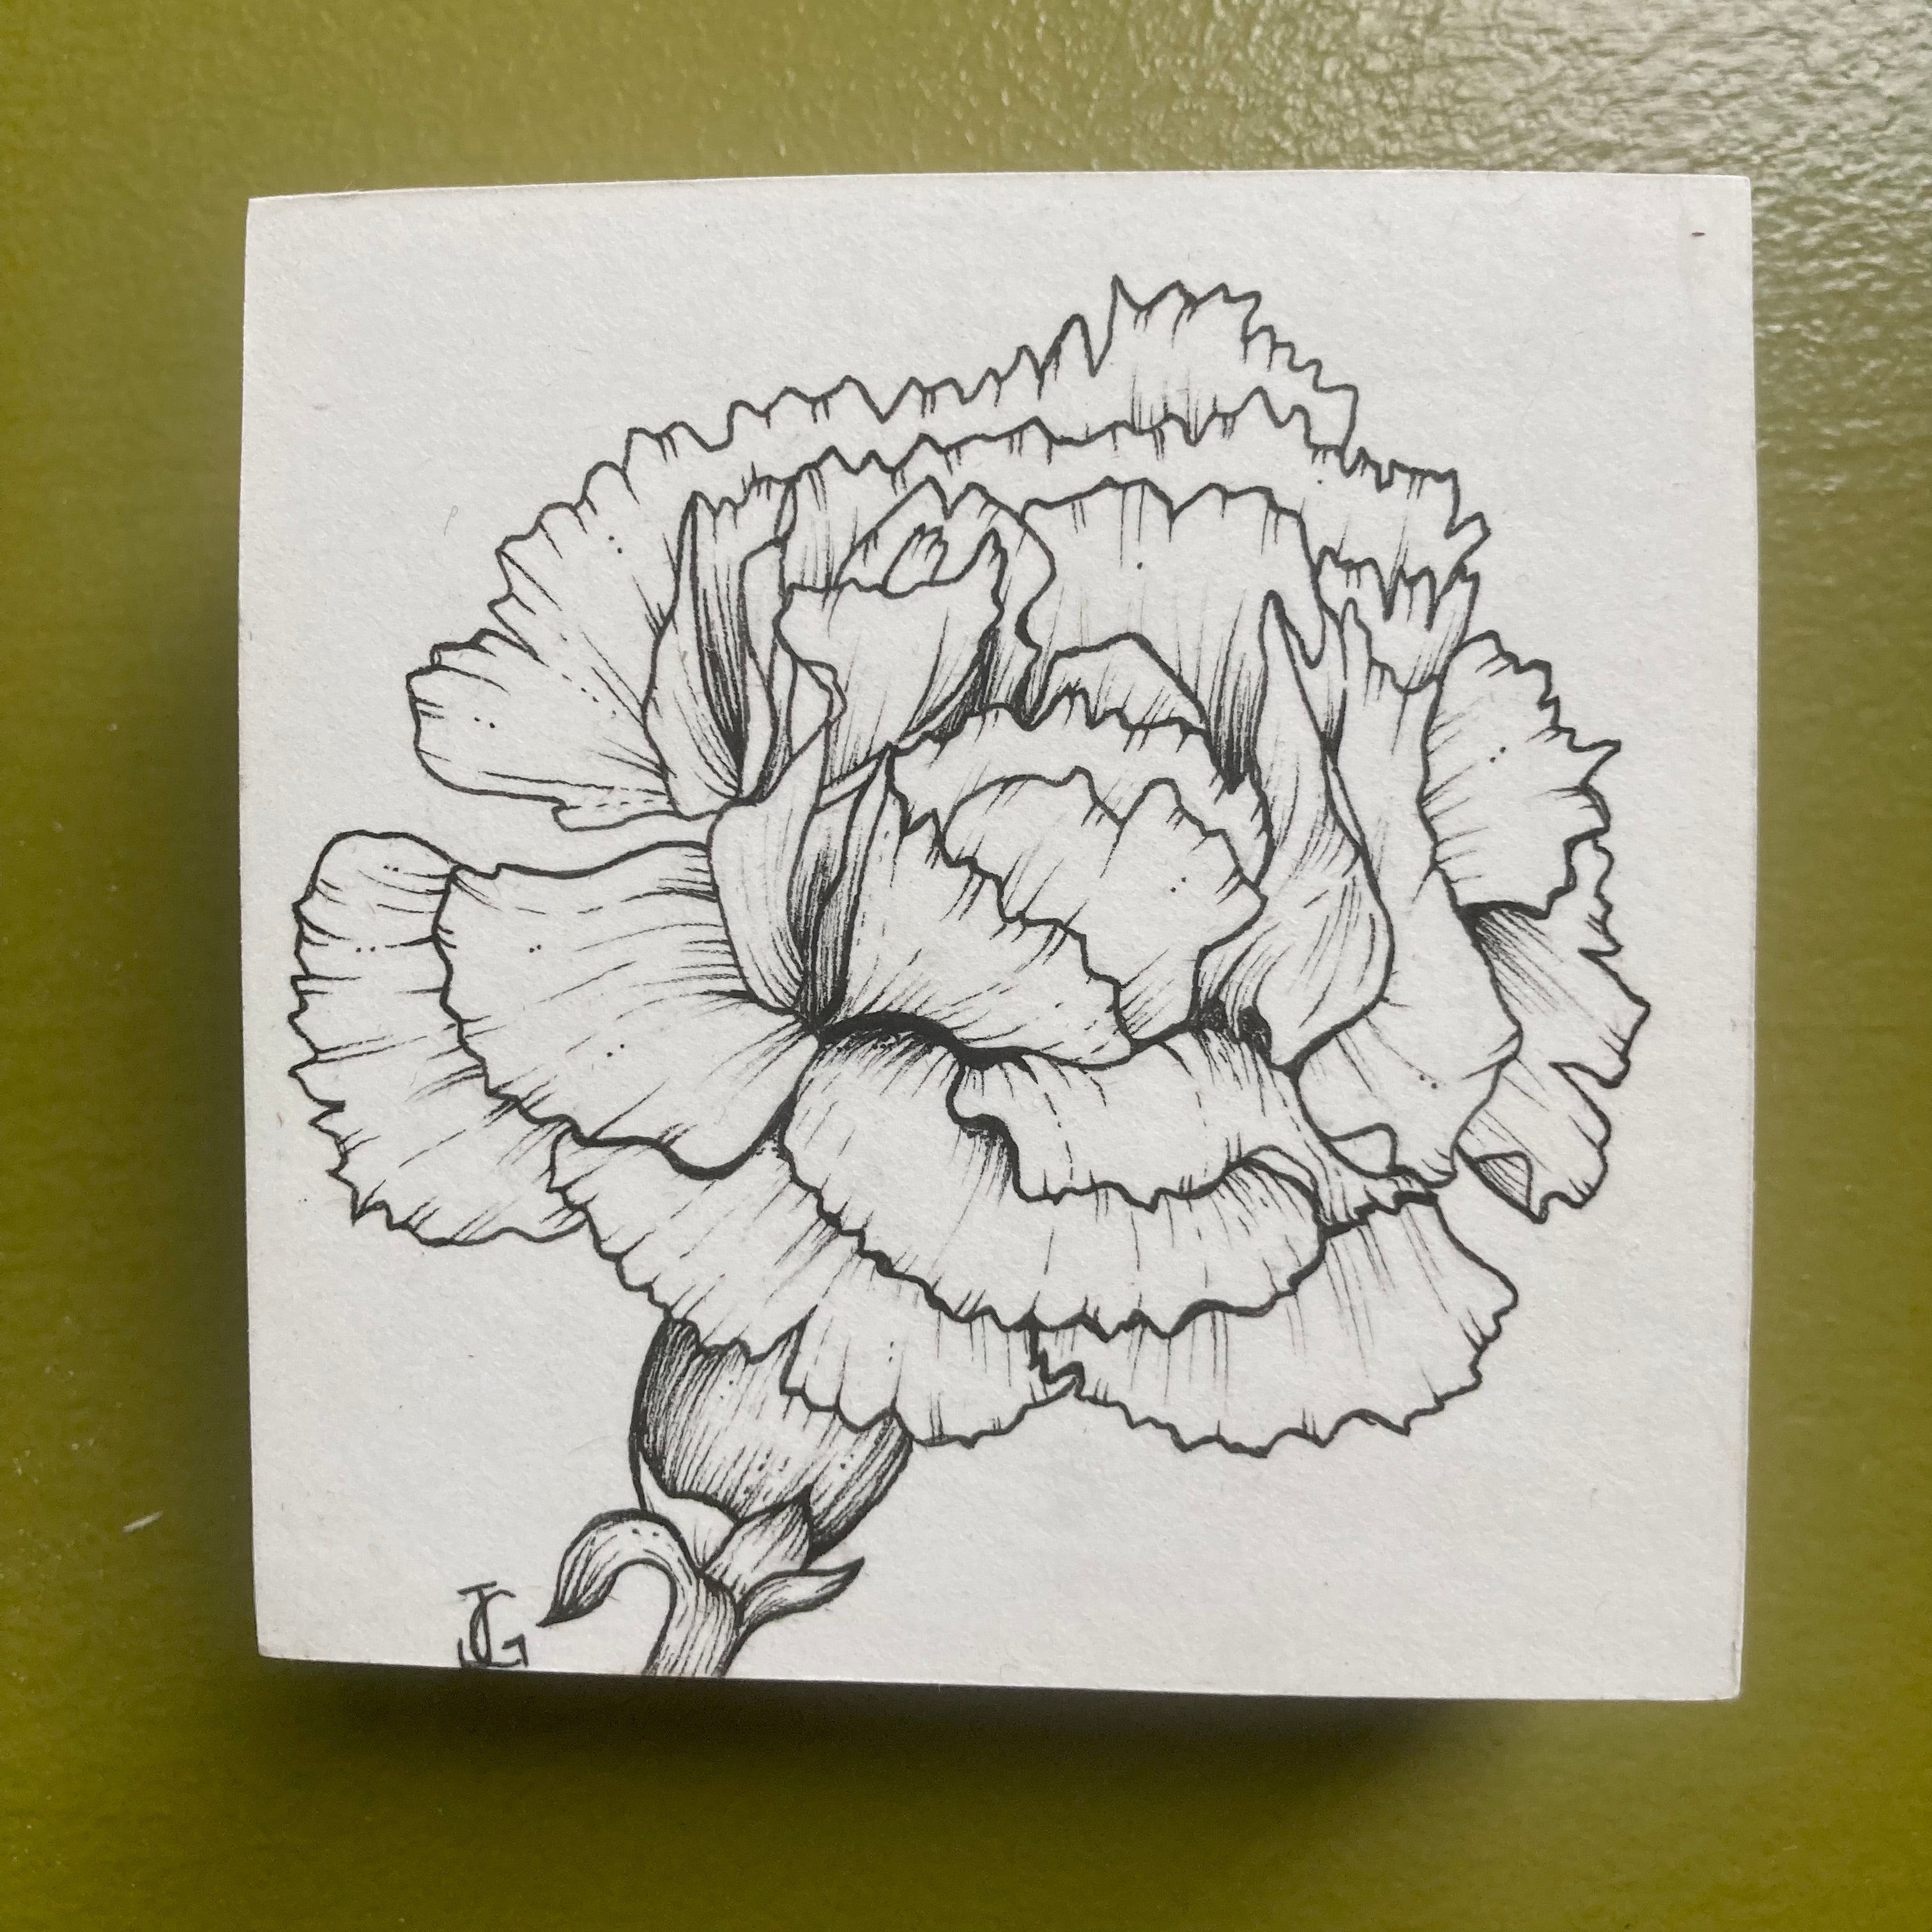 carnation drawing